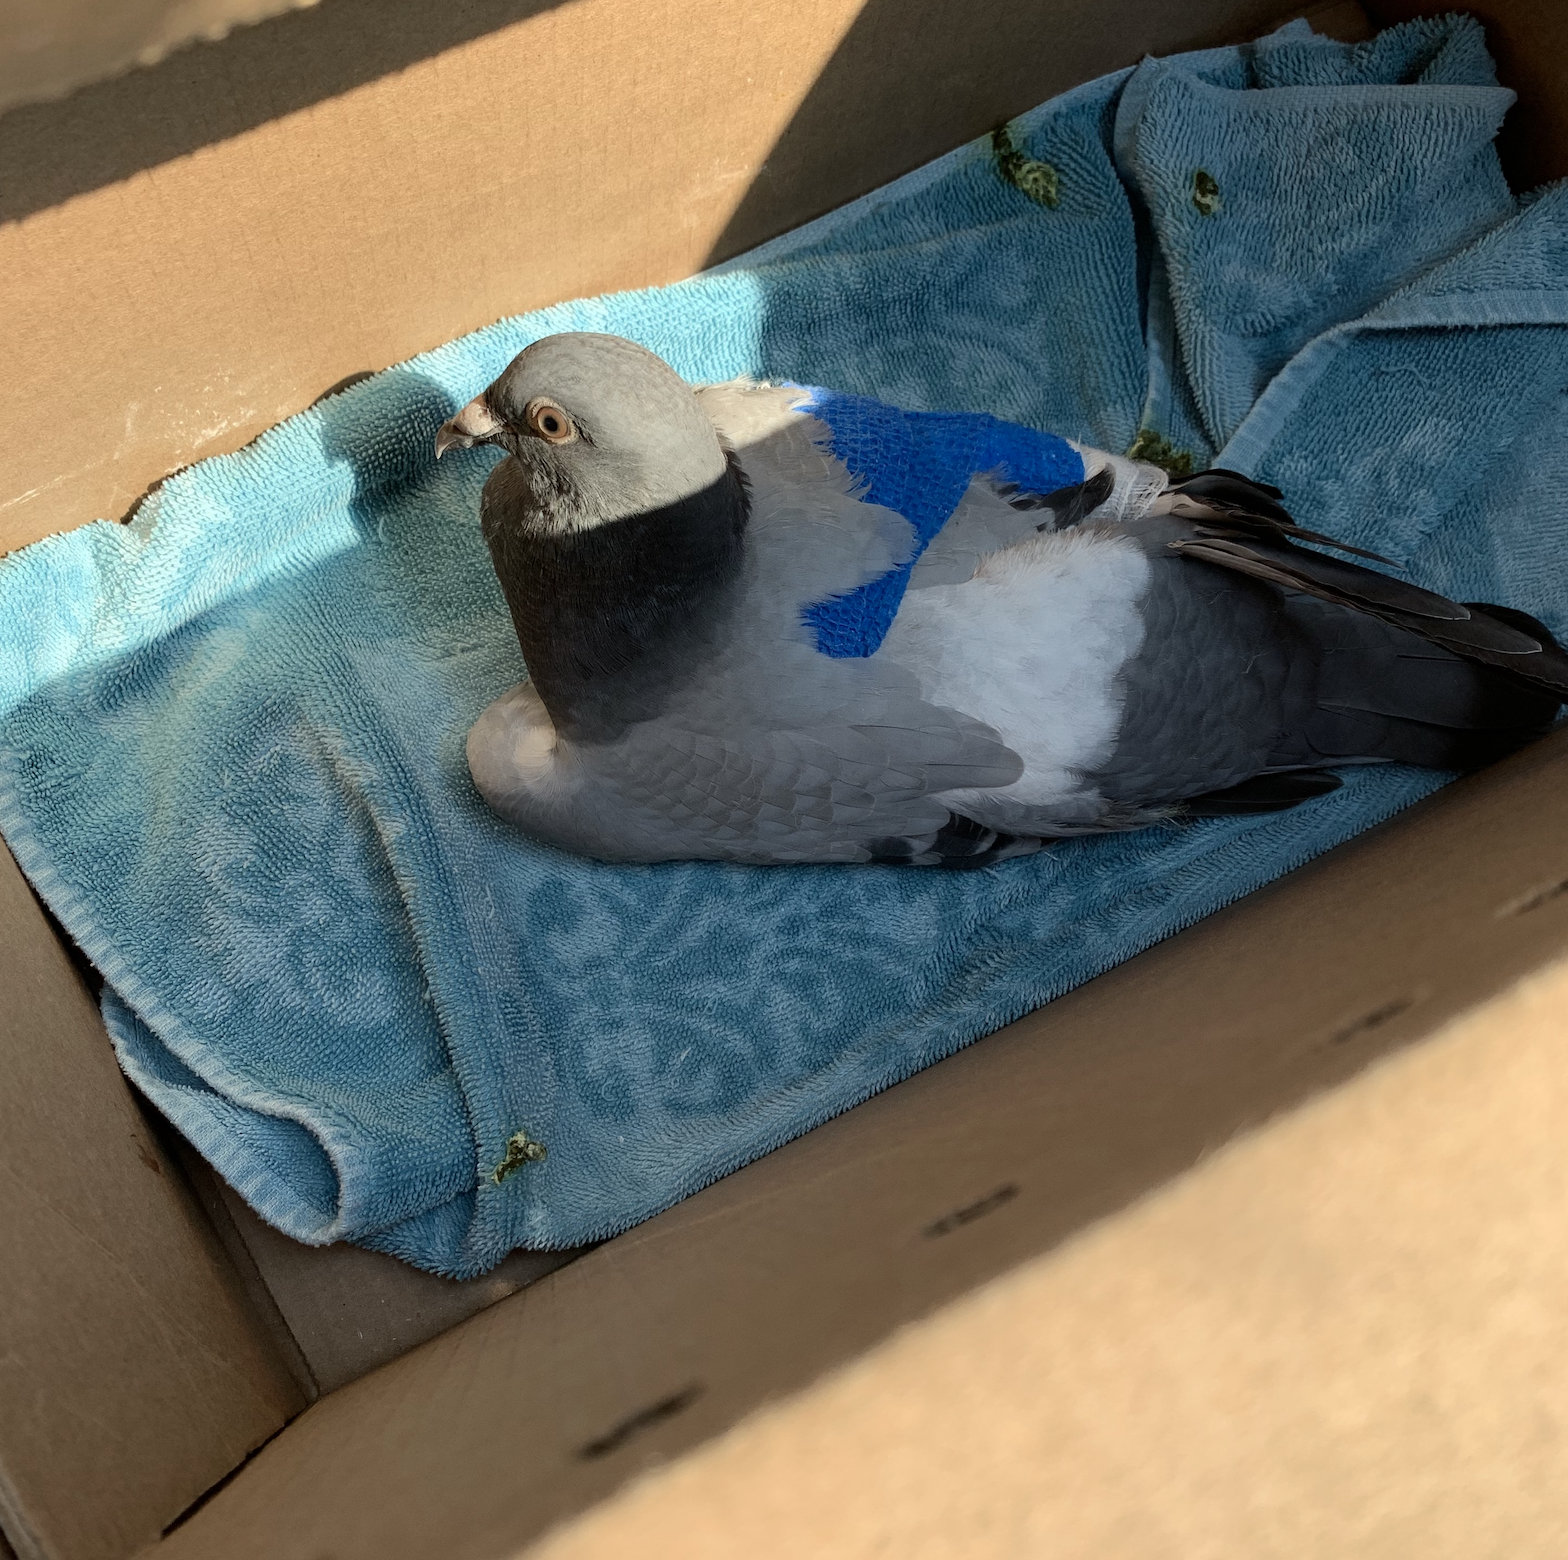 Injured pigeon racing survivor in transport box on way to vet